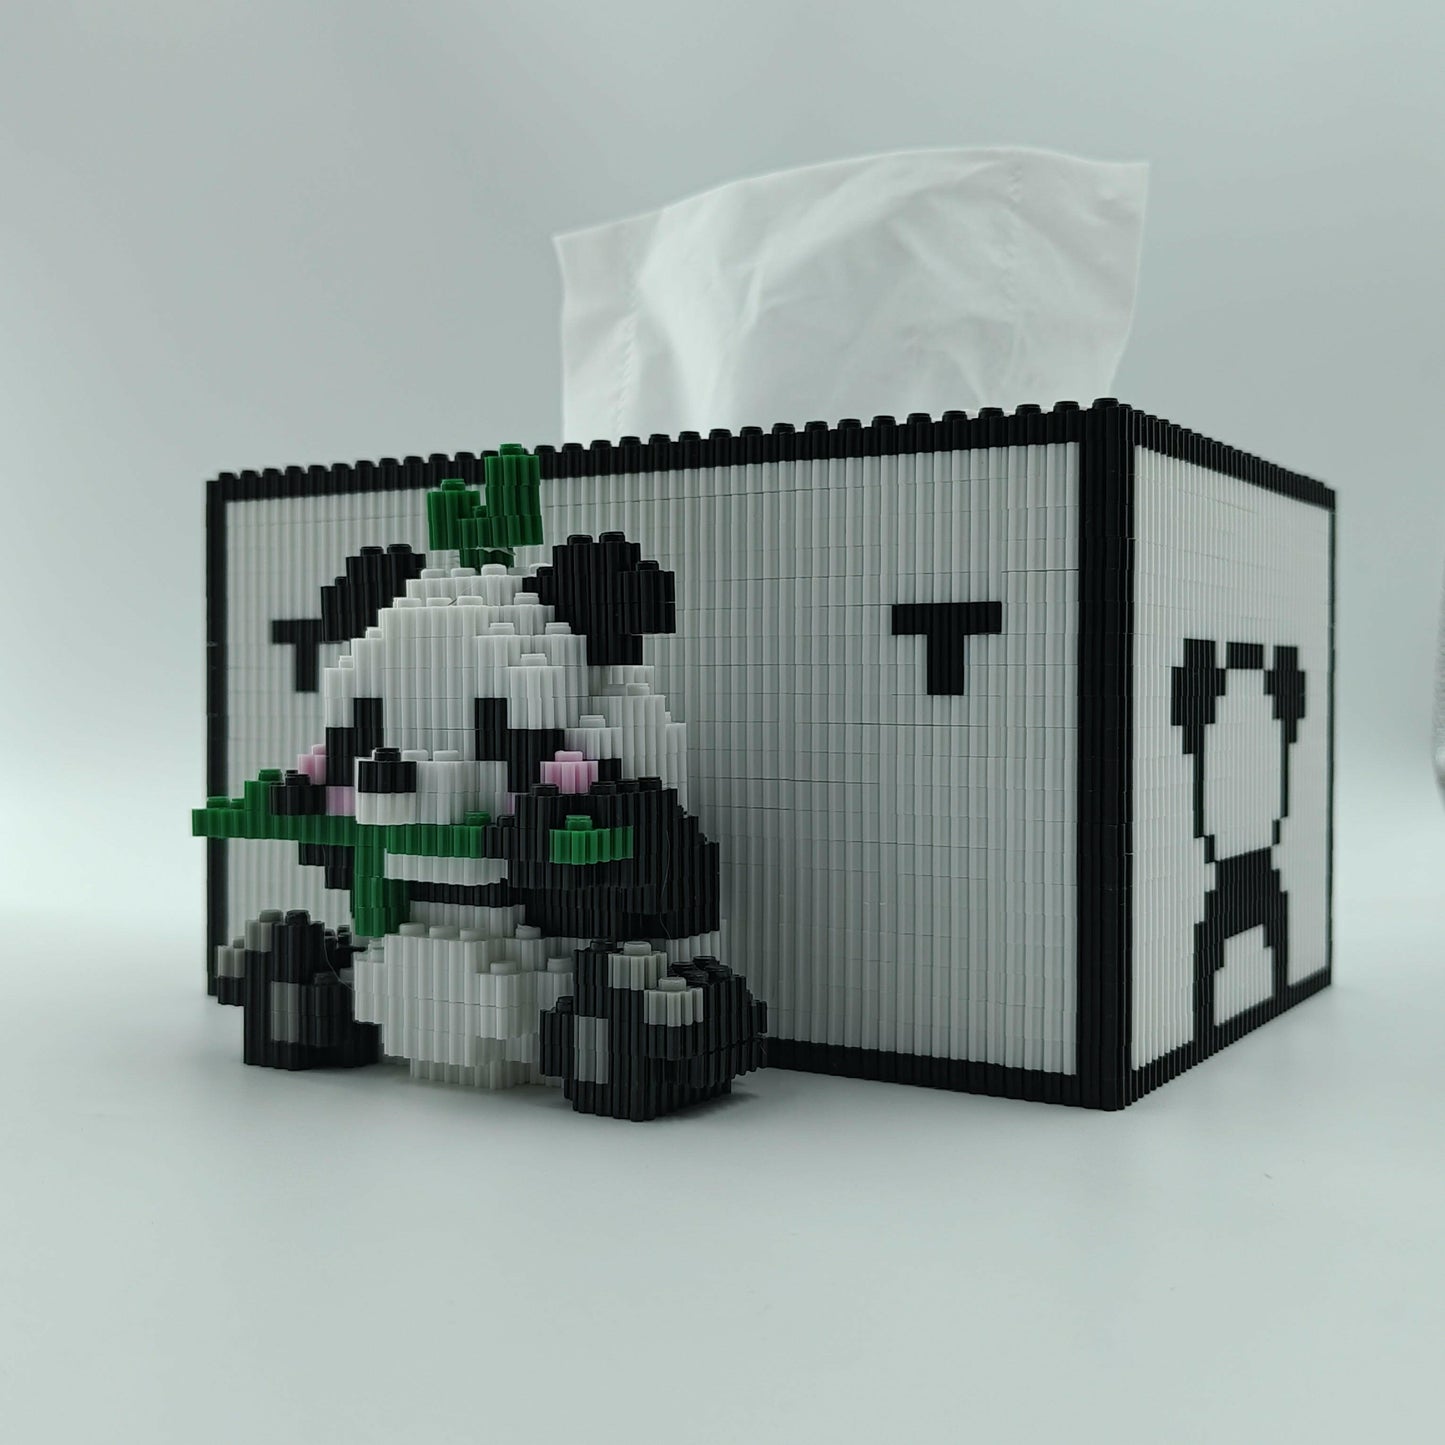 Building block tissue box cute panda designed side look